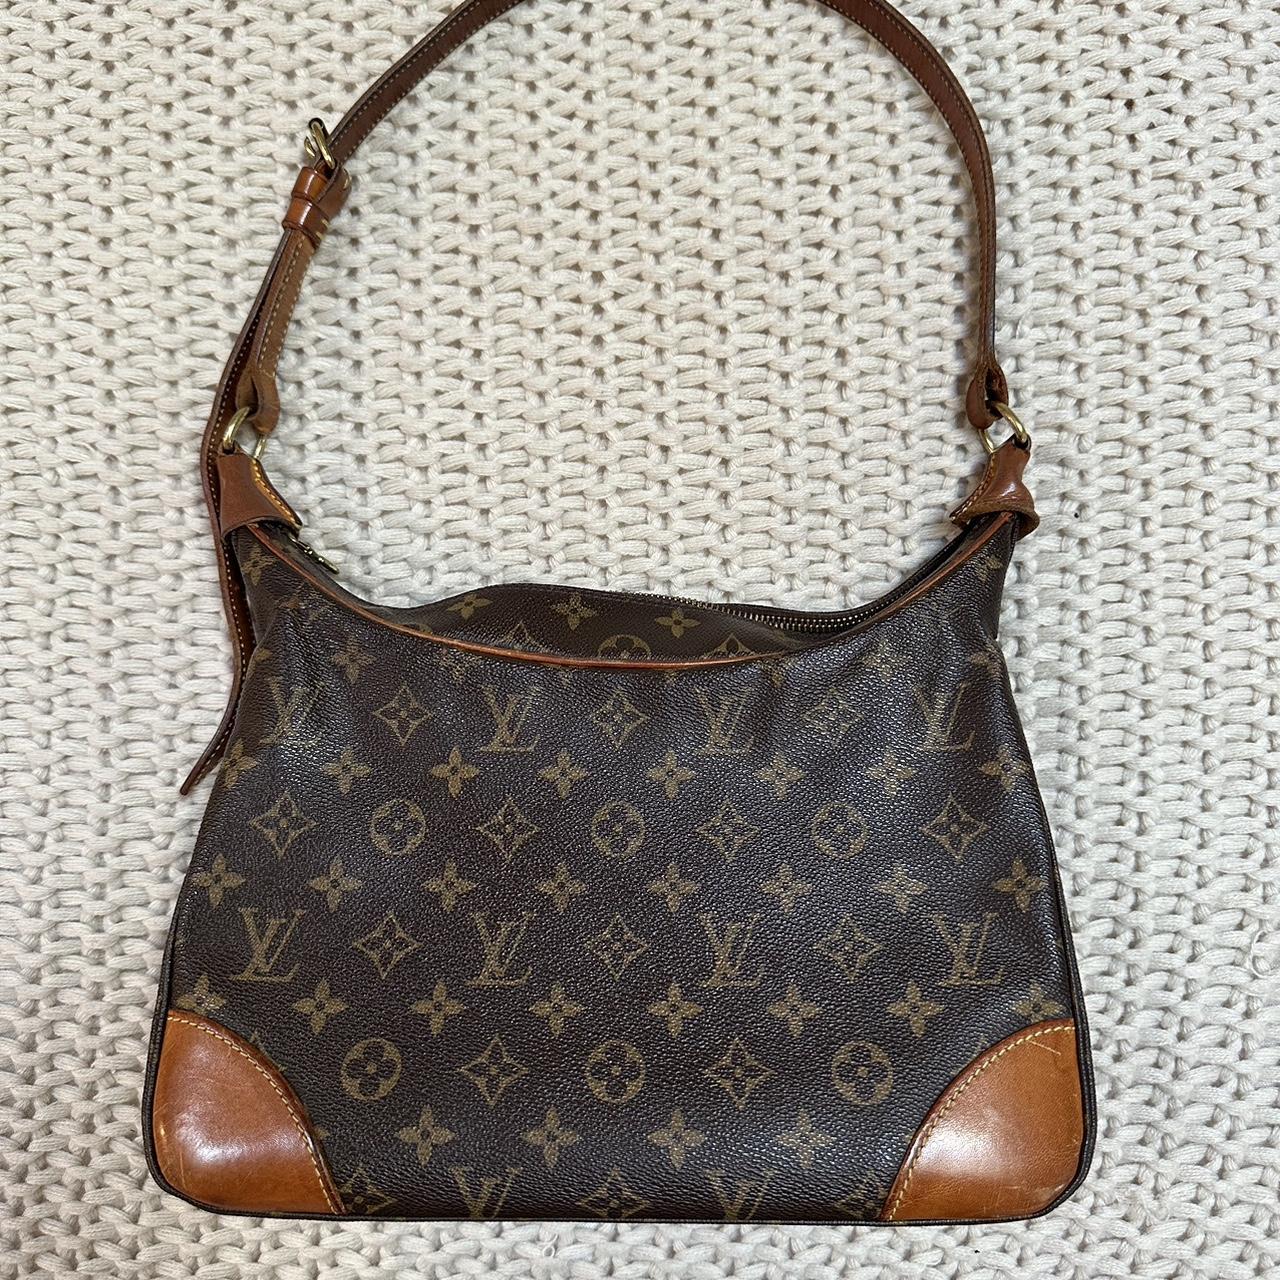 How To Authenticate Vintage Louis Vuitton Bag